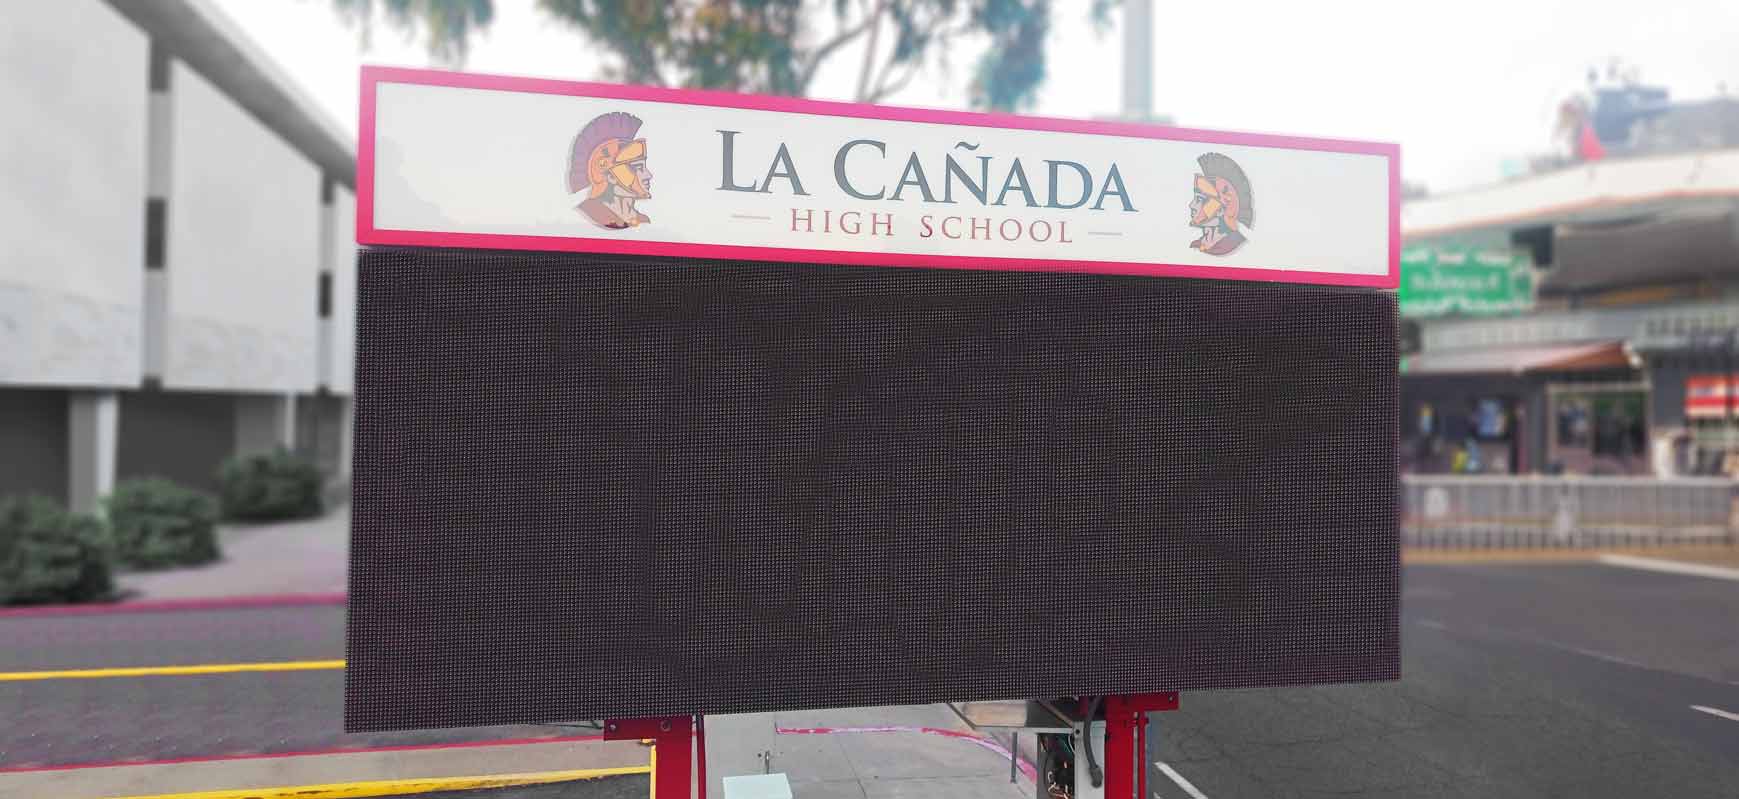 LA Cañada High School LED display along with the printed school name